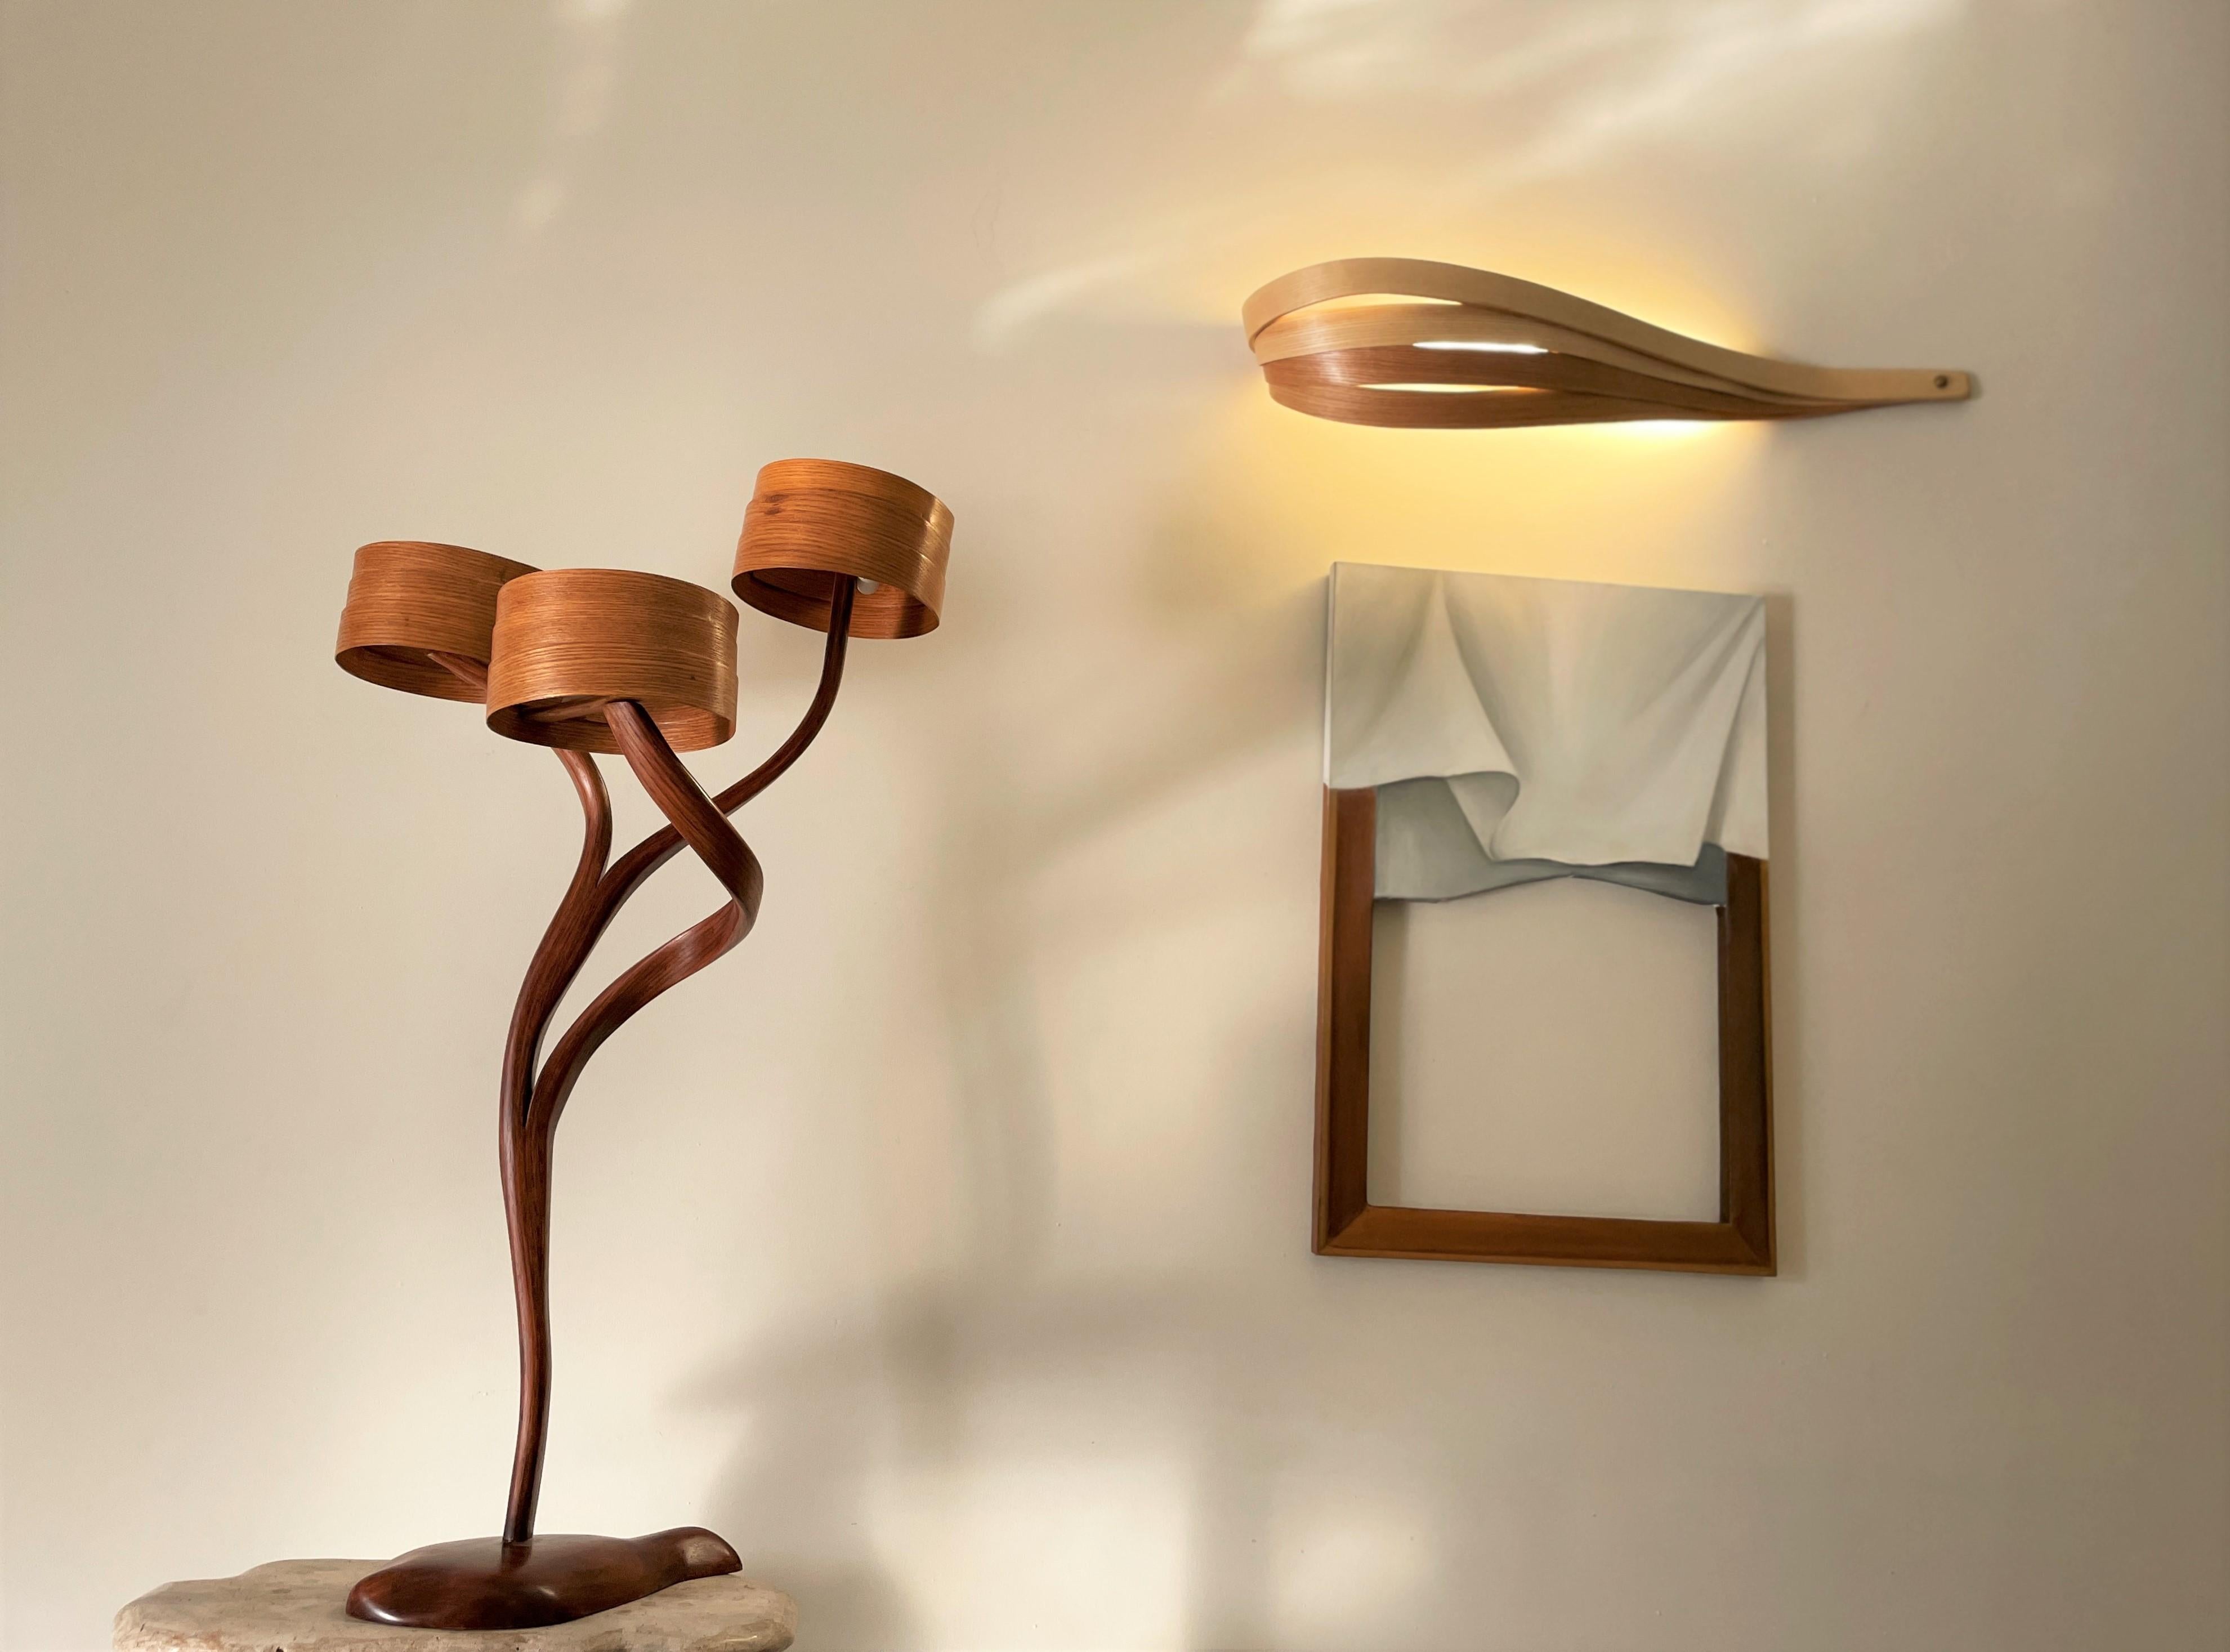 Woodwork Side Lamp No. 3 - Vrksa Series, by Raka Studio For Sale